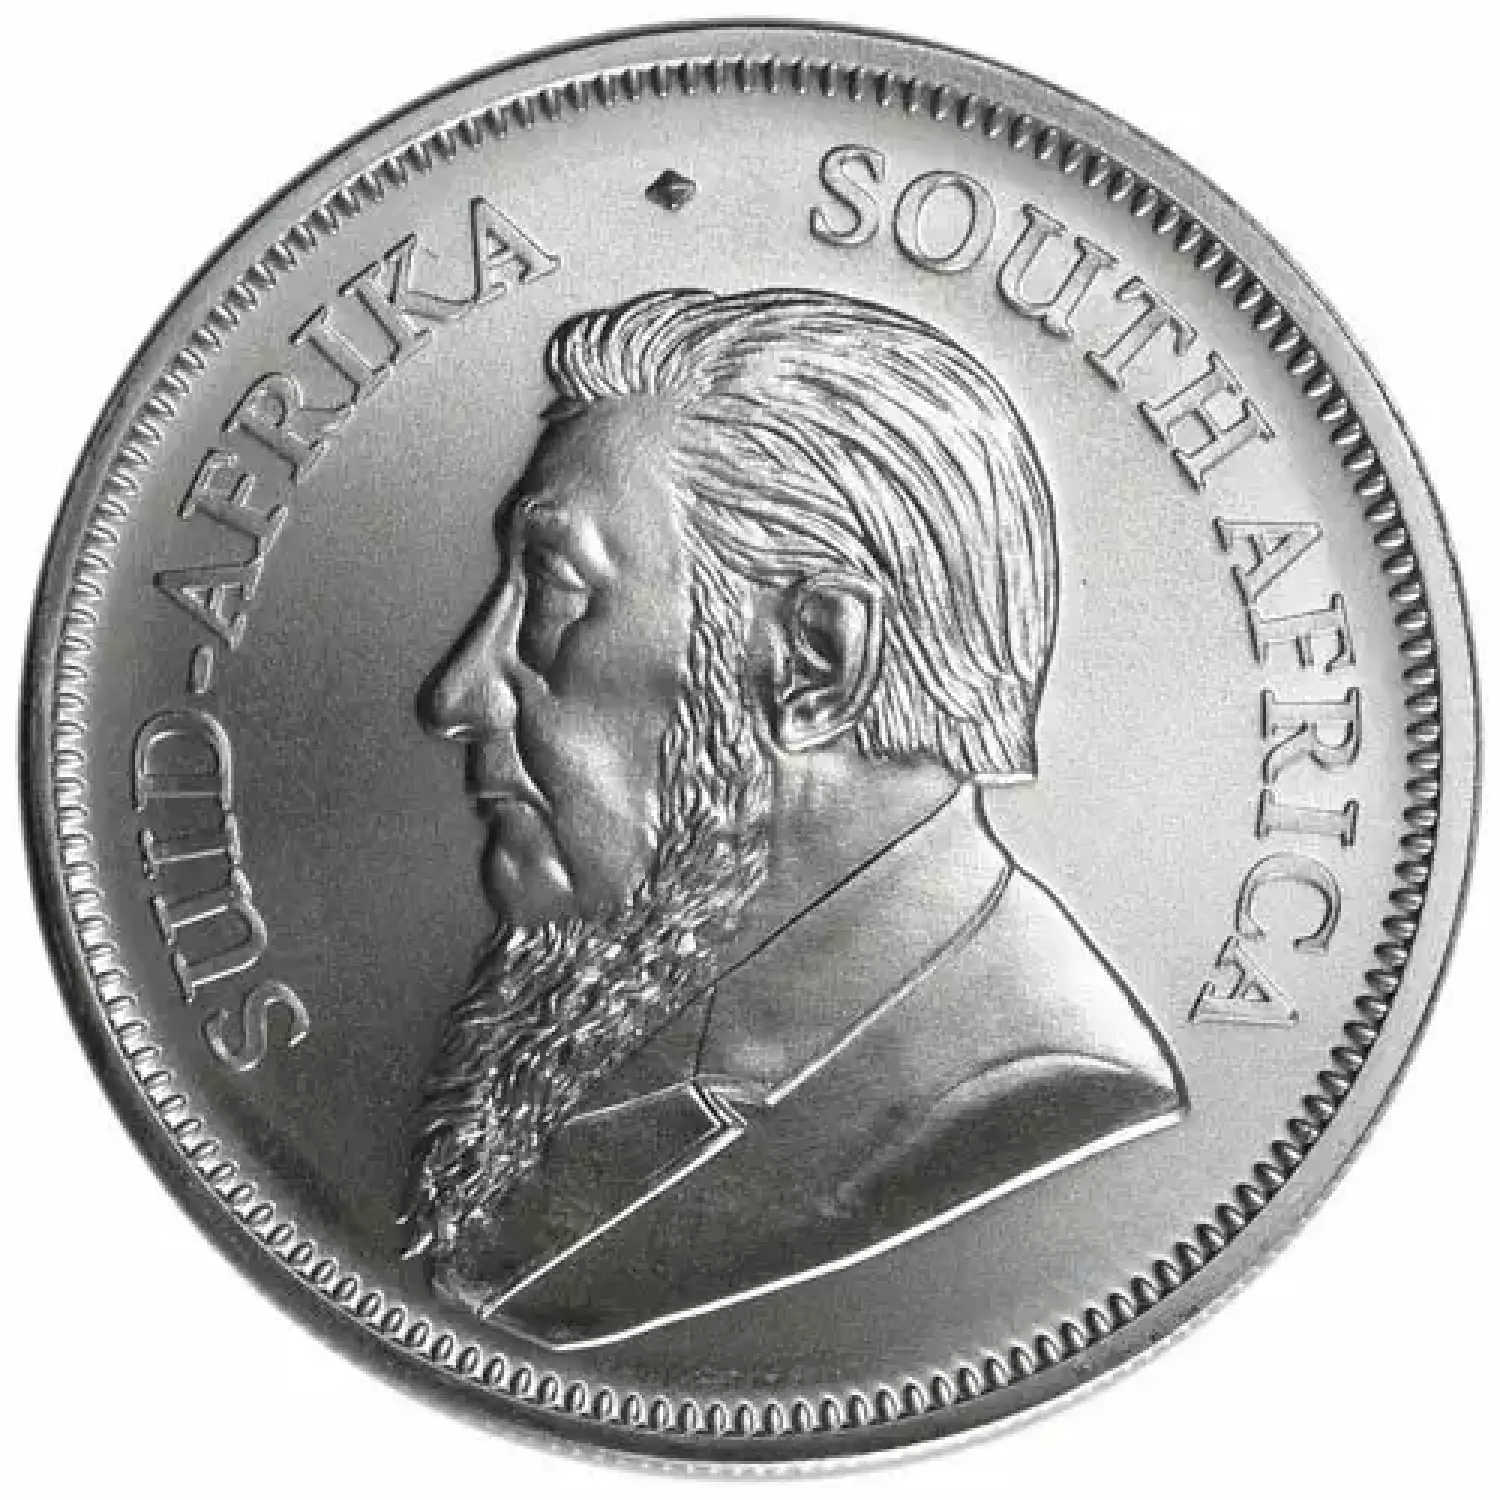 2021 1 oz South African Silver Krugerrand Coin (BU) (2)